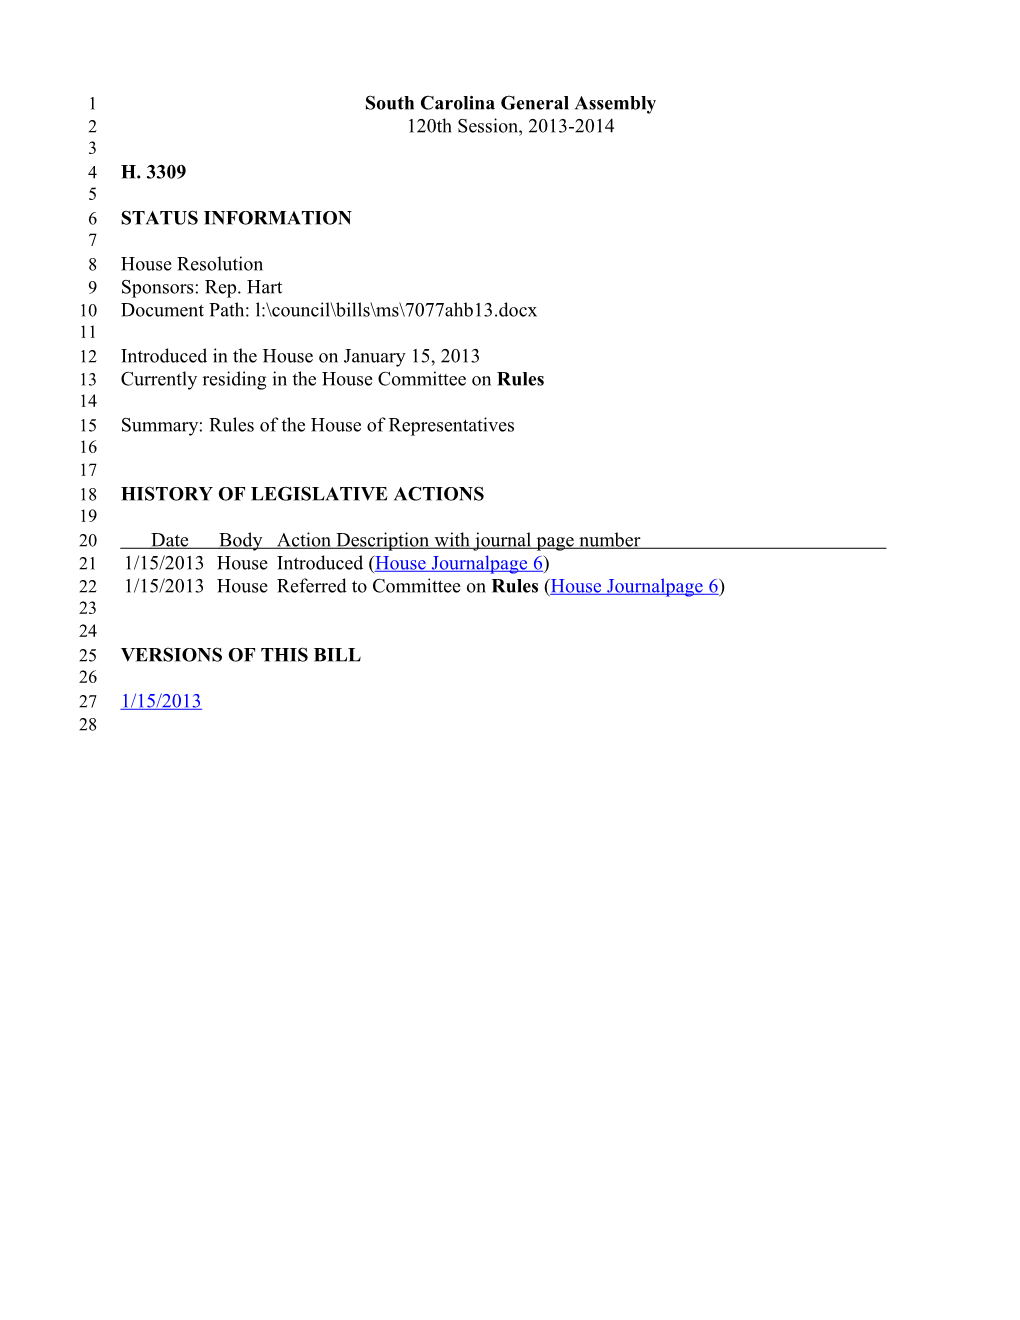 2013-2014 Bill 3309: Rules of the House of Representatives - South Carolina Legislature Online